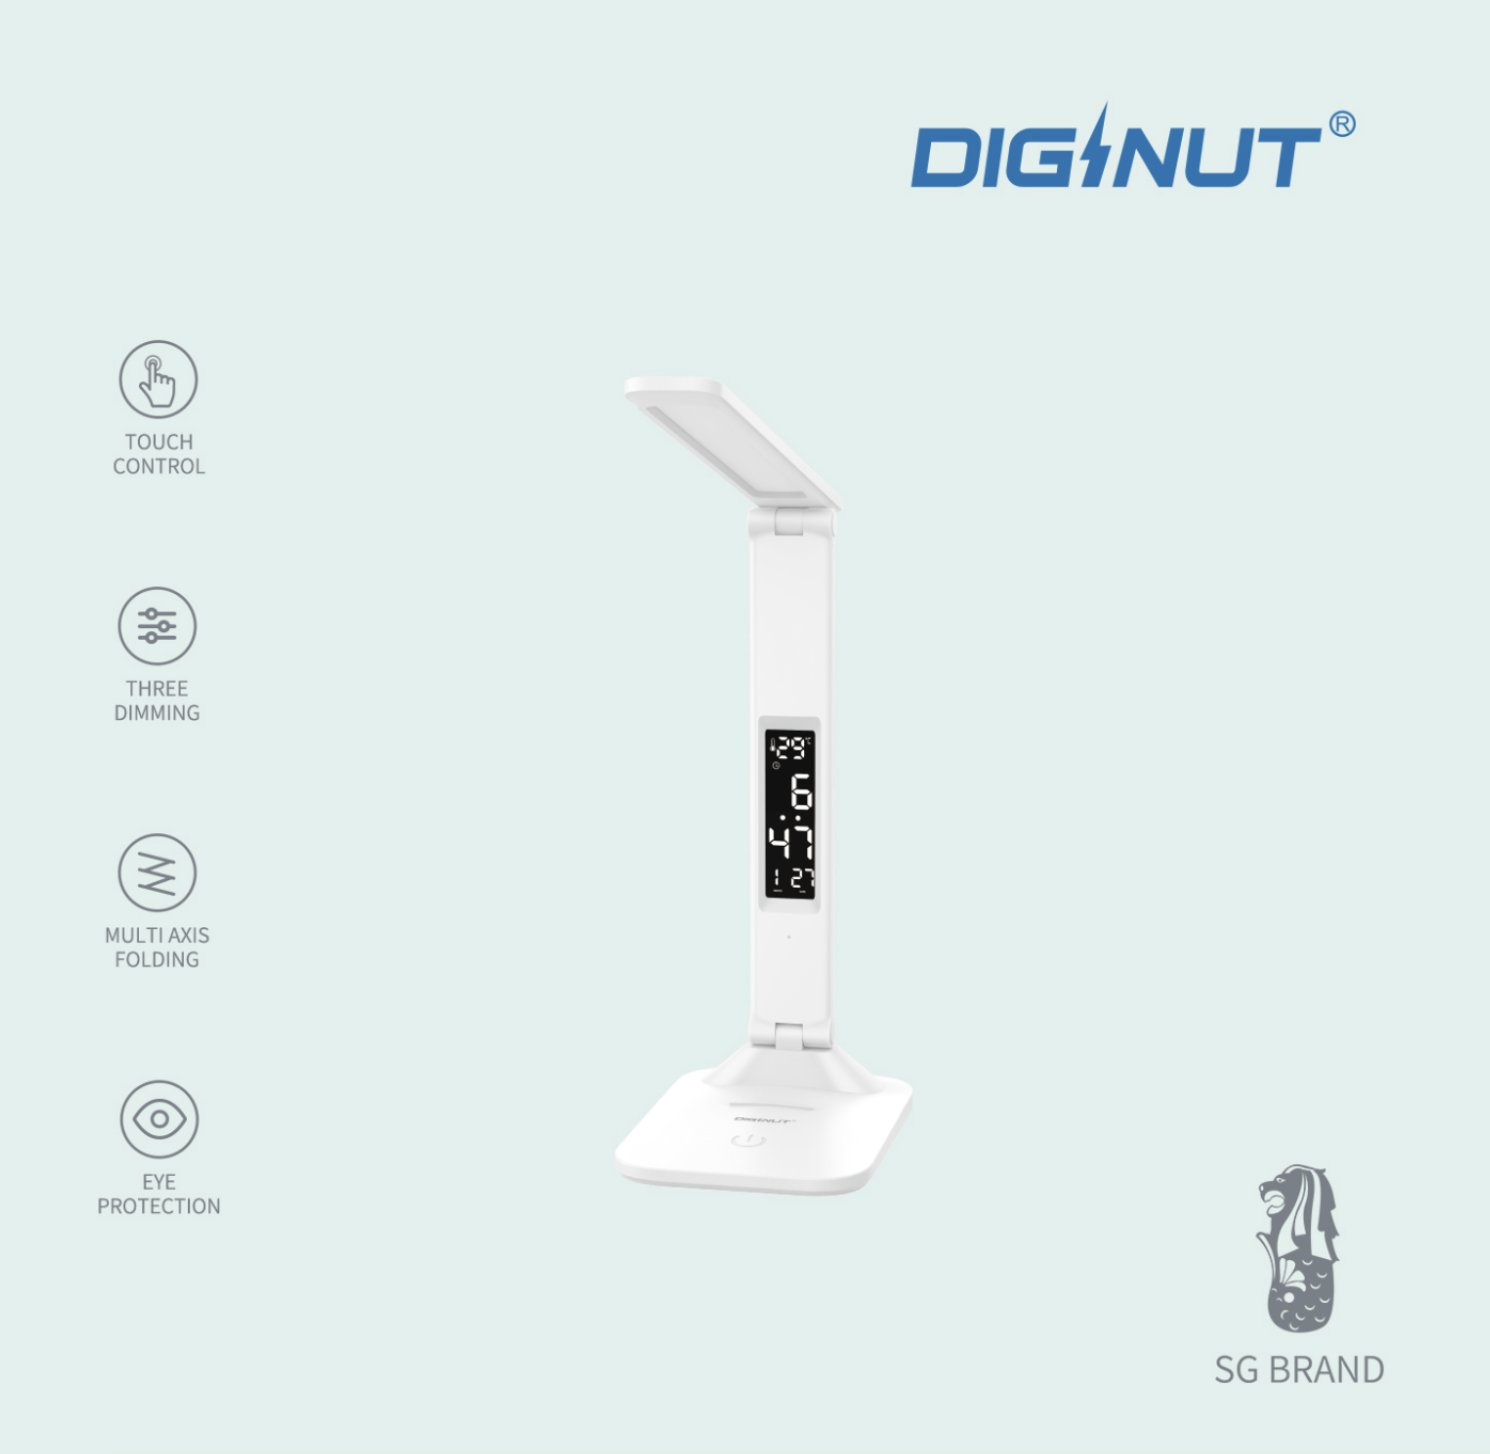 Diginut LT-20 Desk Lamp/ Eye Protection/ Multi Axis Folding/ LED Display Screen/ 3 Lighting Modes